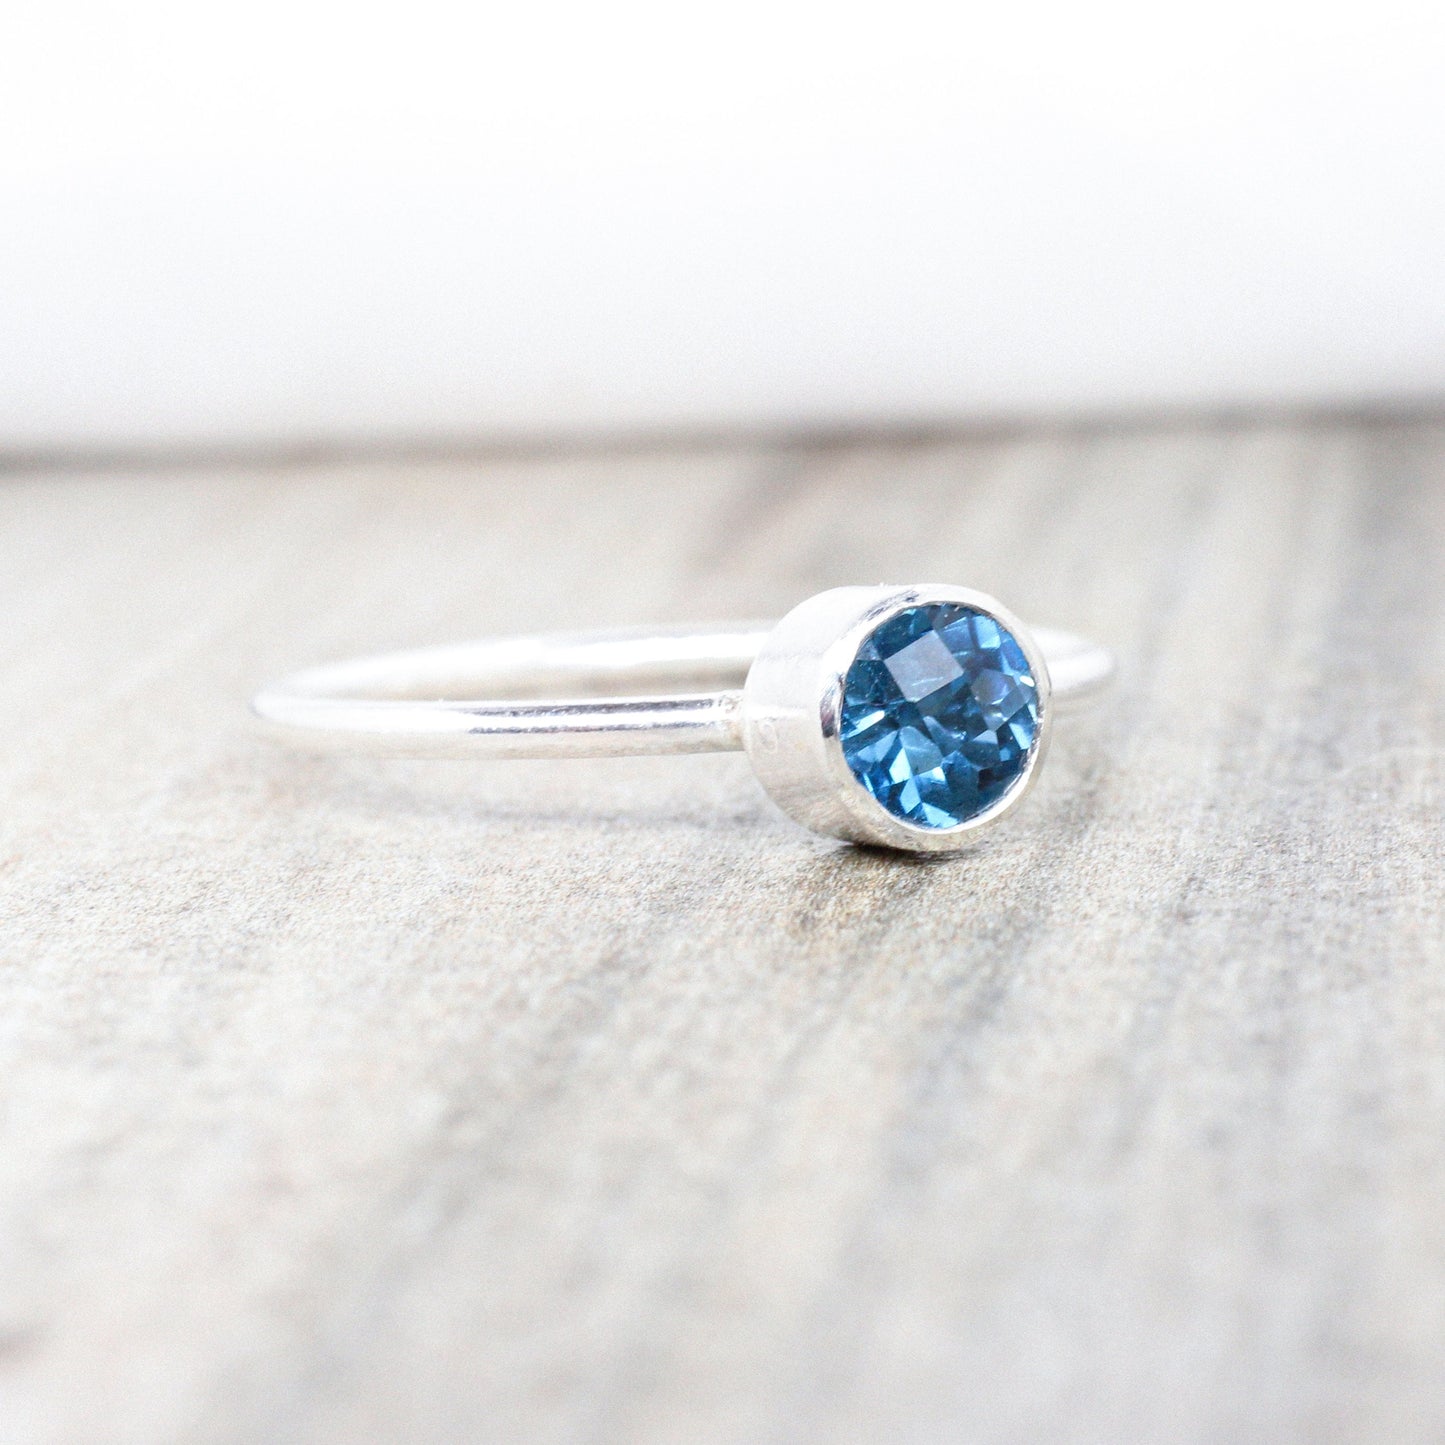 London Blue Topaz Ring in Sterling Silver // 5mm Faceted Gemstone December Birthstone